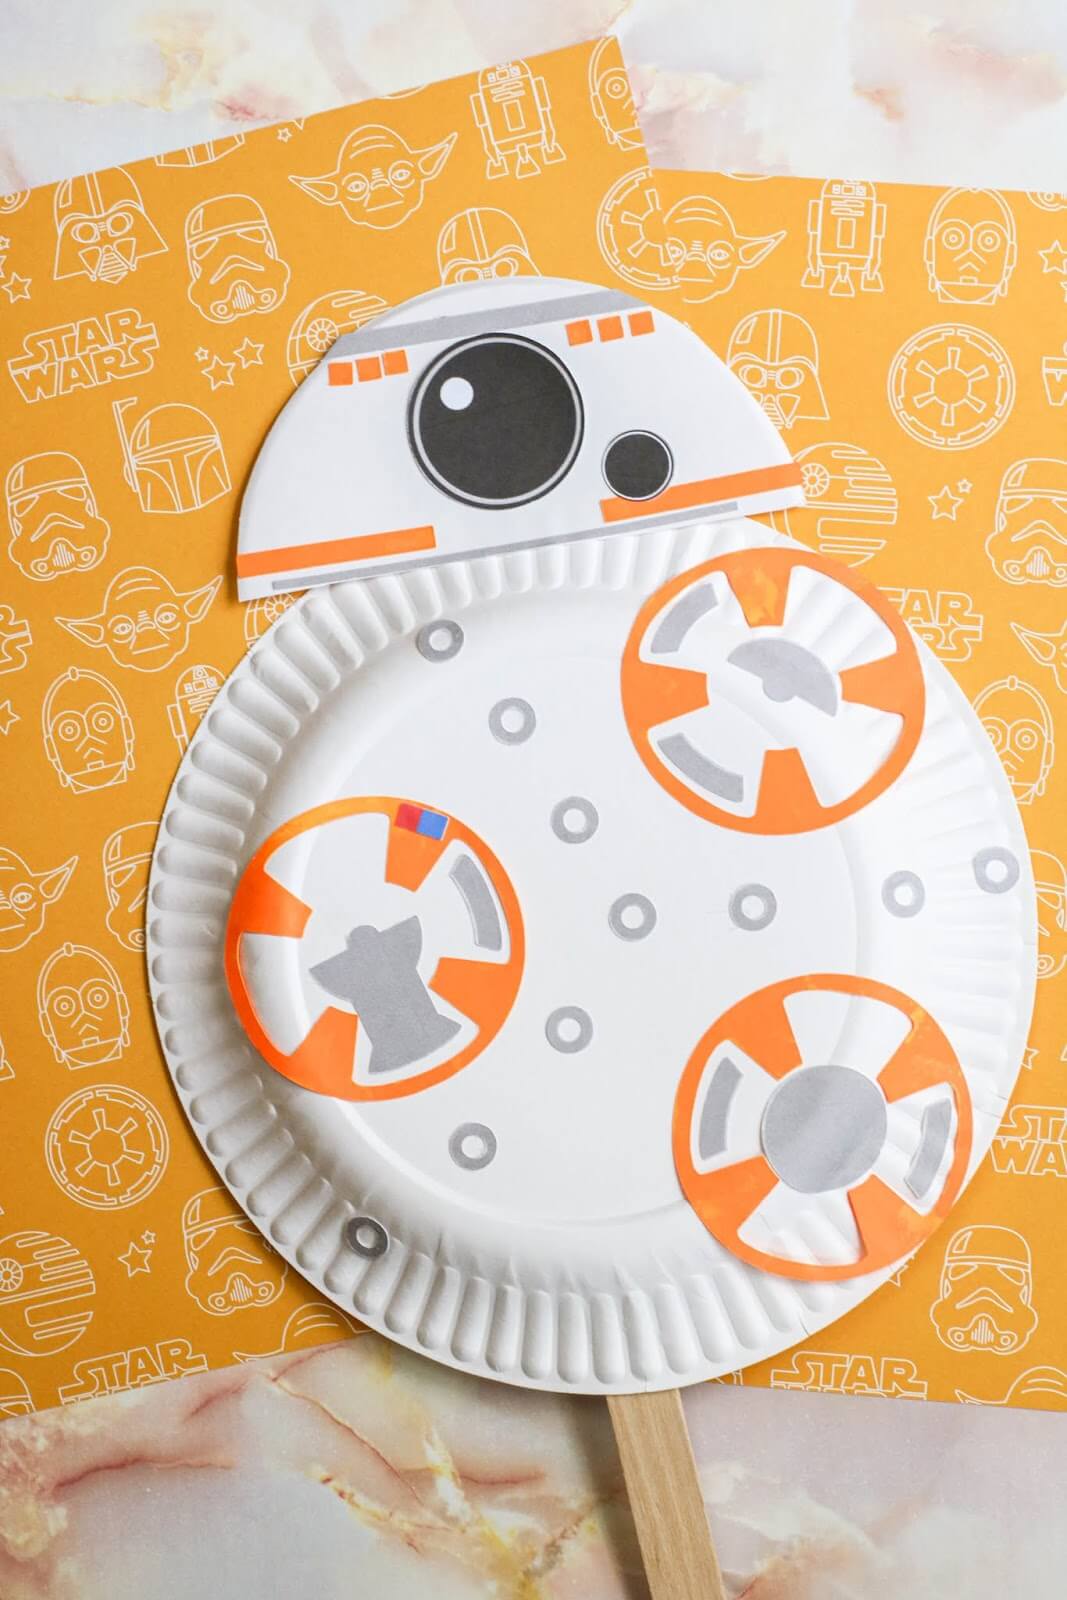 Star Wars Paper Plate Craft